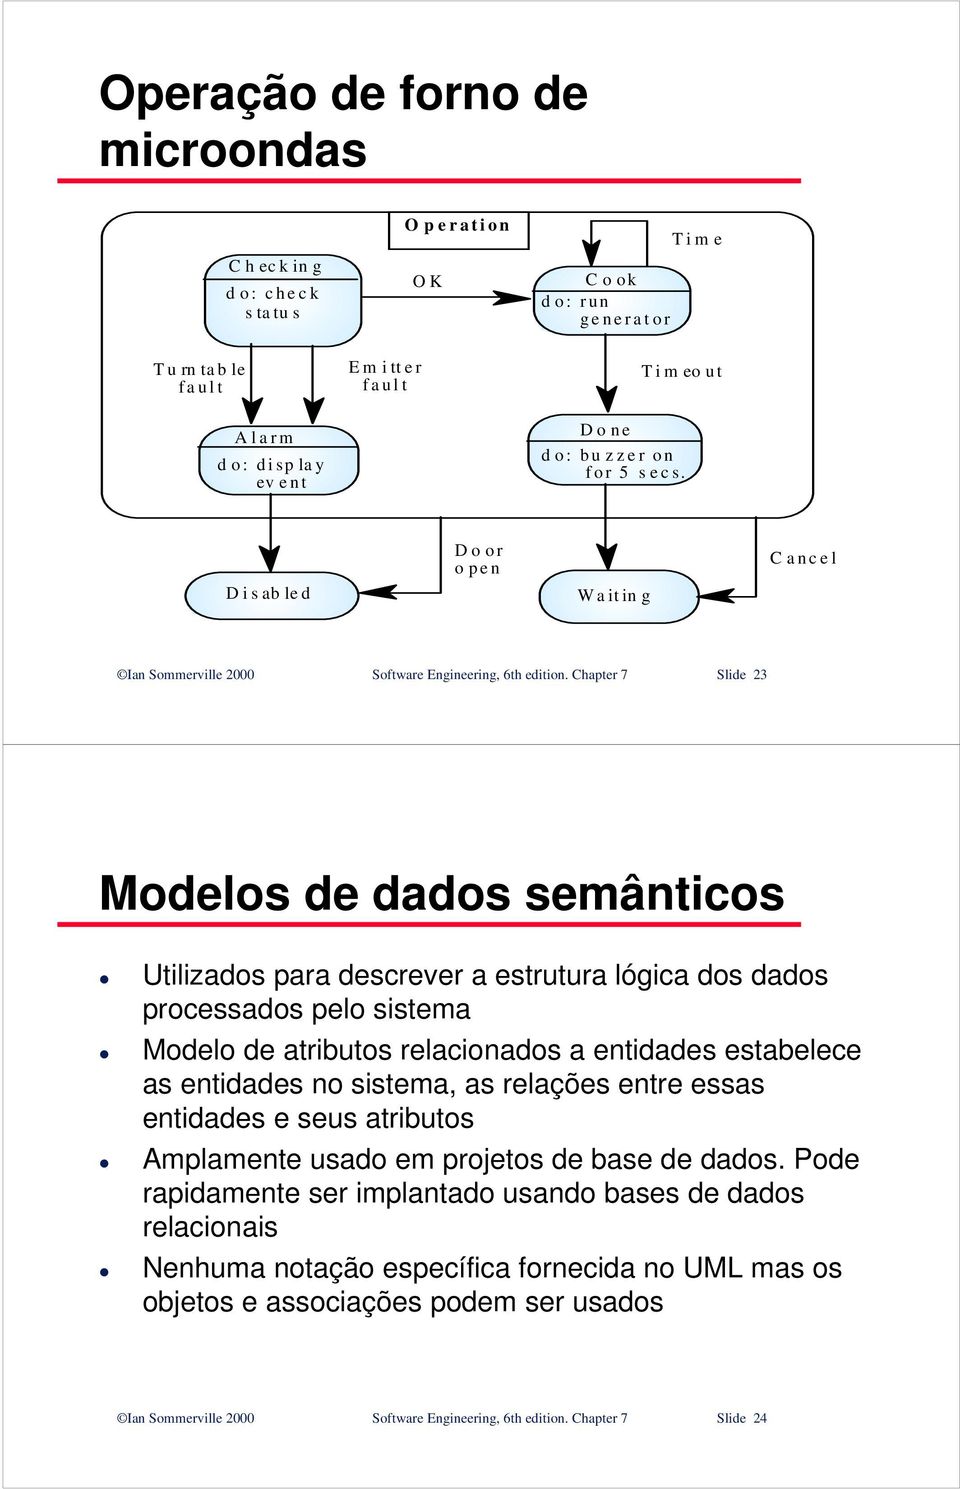 Chapter 7 Slide 23 Modelos de dados semânticos Utilizados para descrever a estrutura lógica dos dados processados pelo sistema Modelo de atributos relacionados a entidades estabelece as entidades no